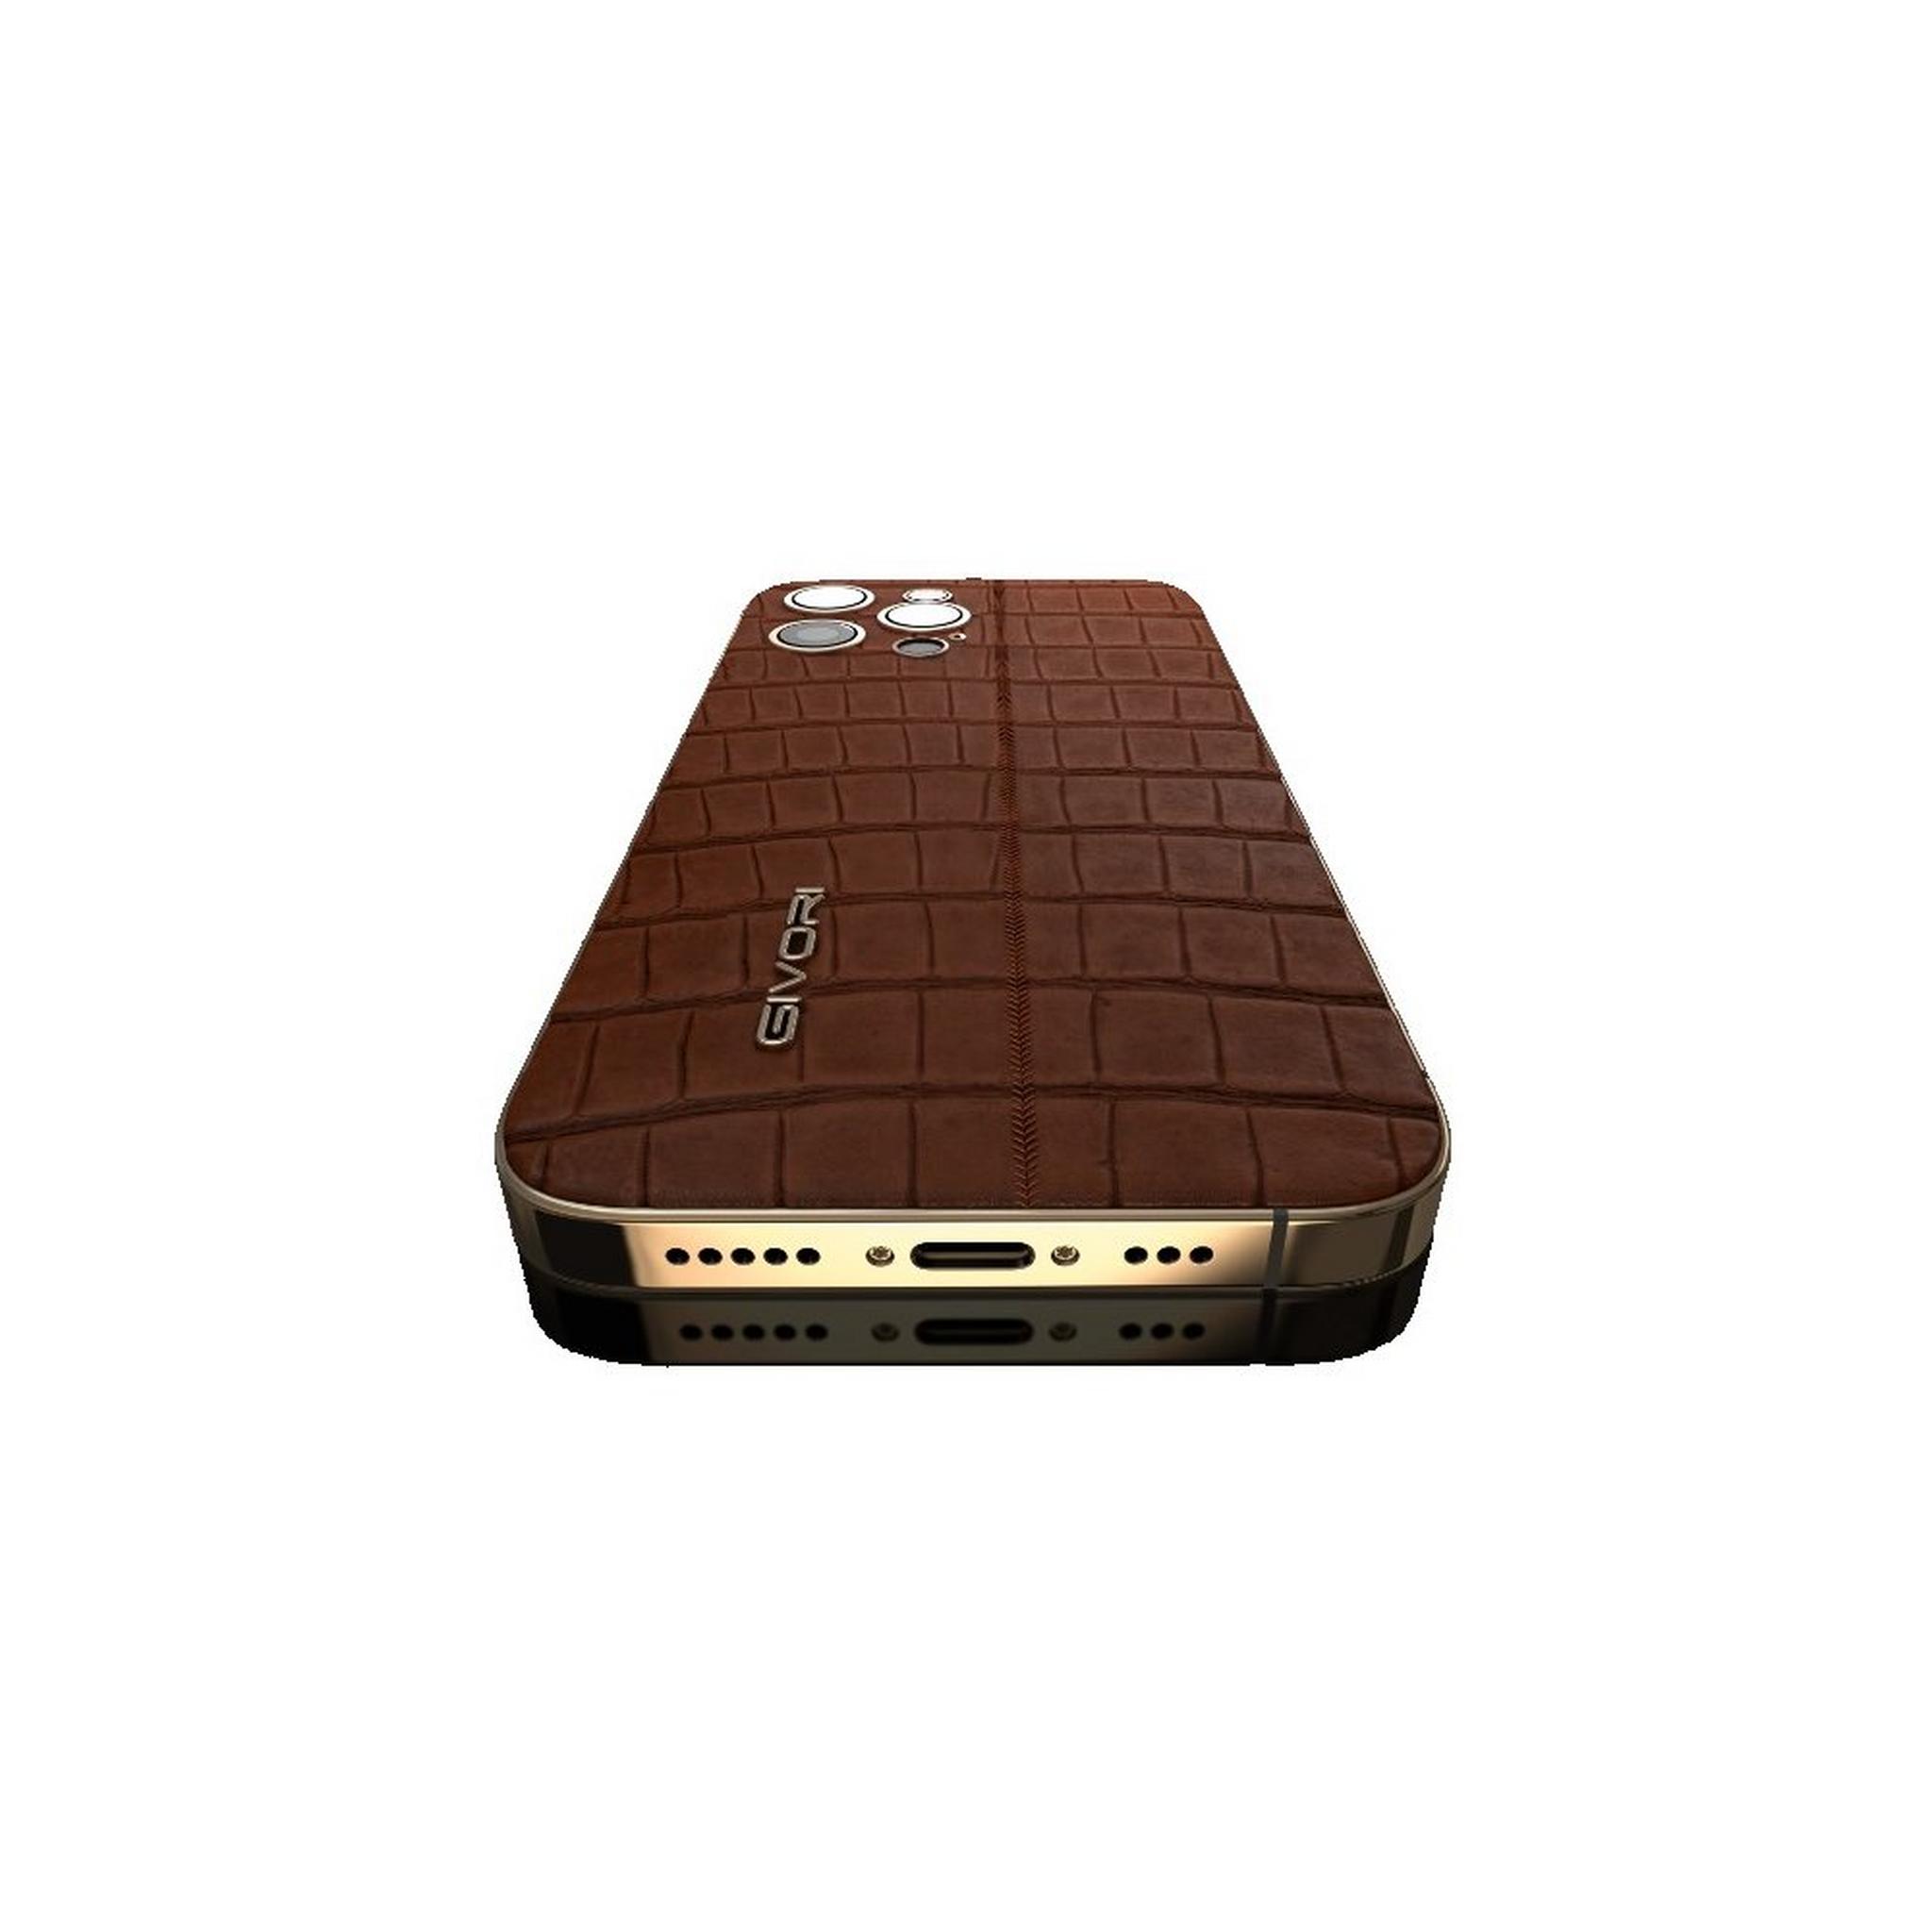 Givori iPhone 14 Pro Max Phone, 6GB RAM, 256GB, 6.7 inch, Gold Plated Frame - Alligator Cigar, Silver